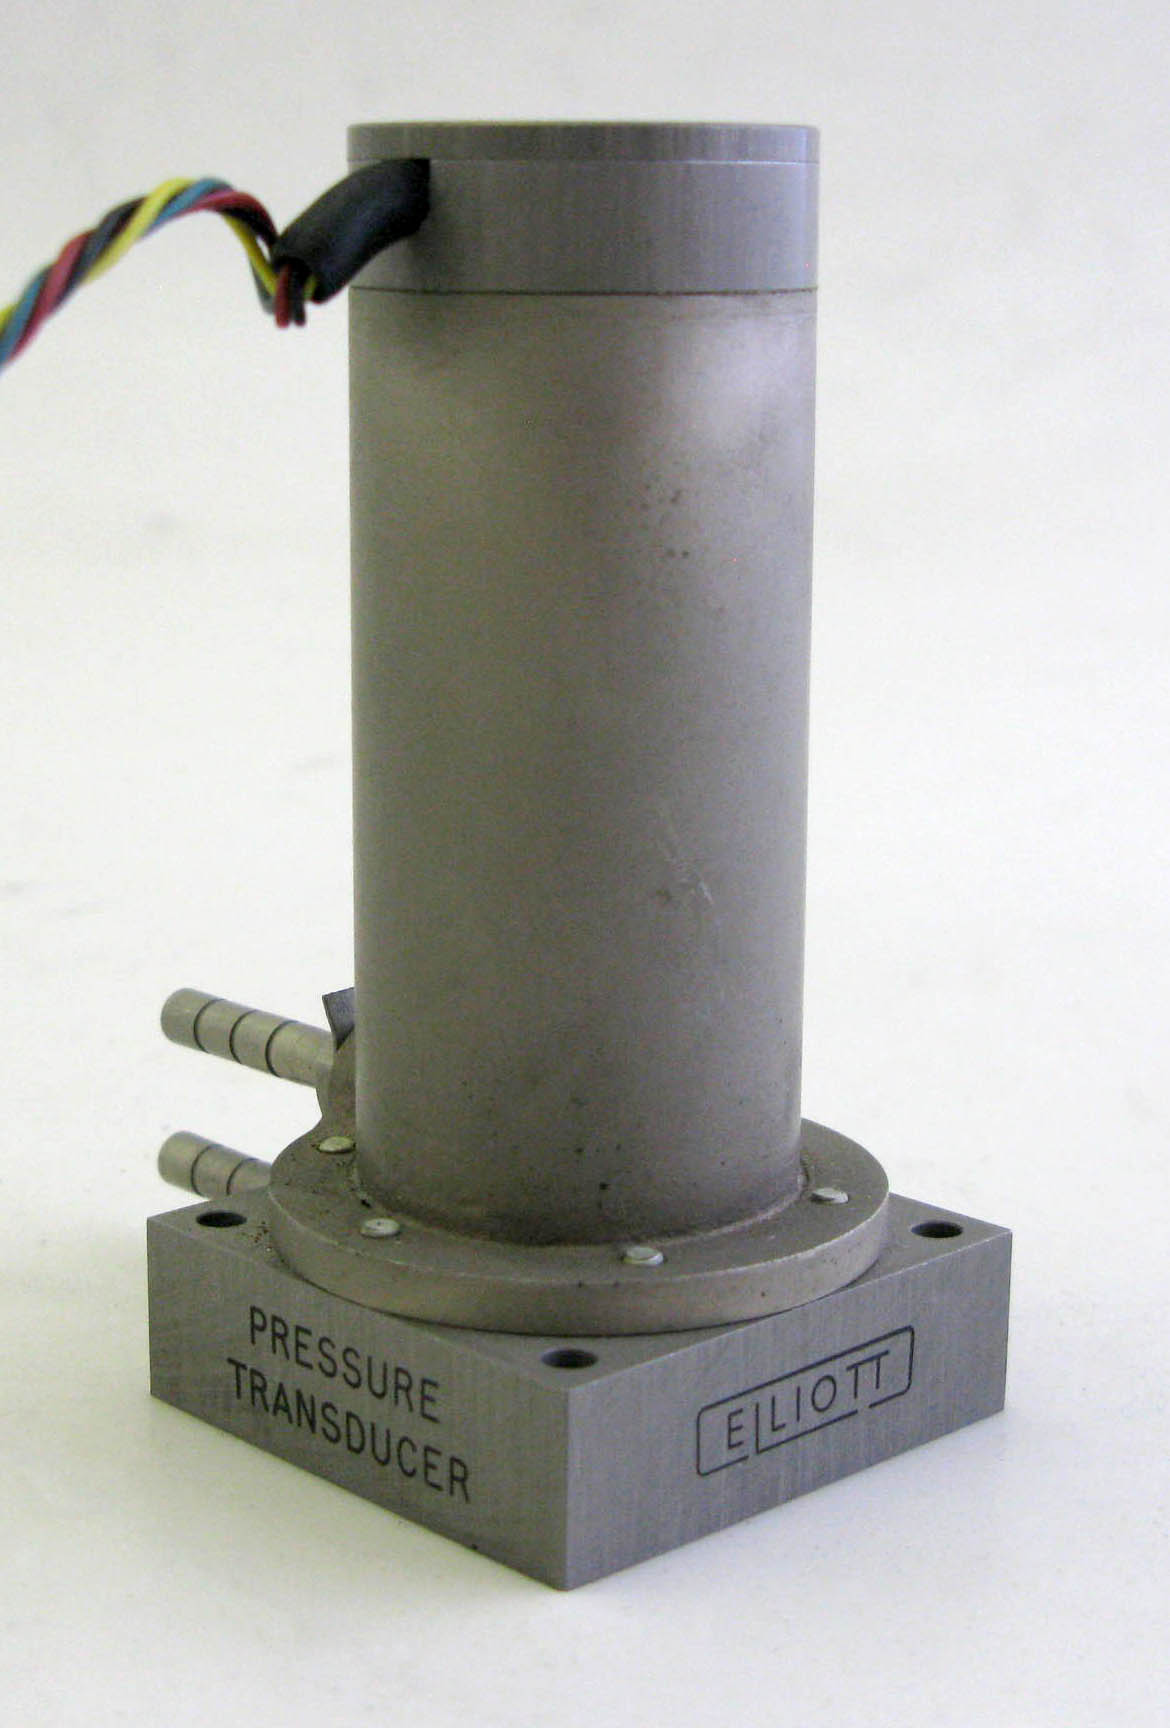 Differential Pressure Transducer